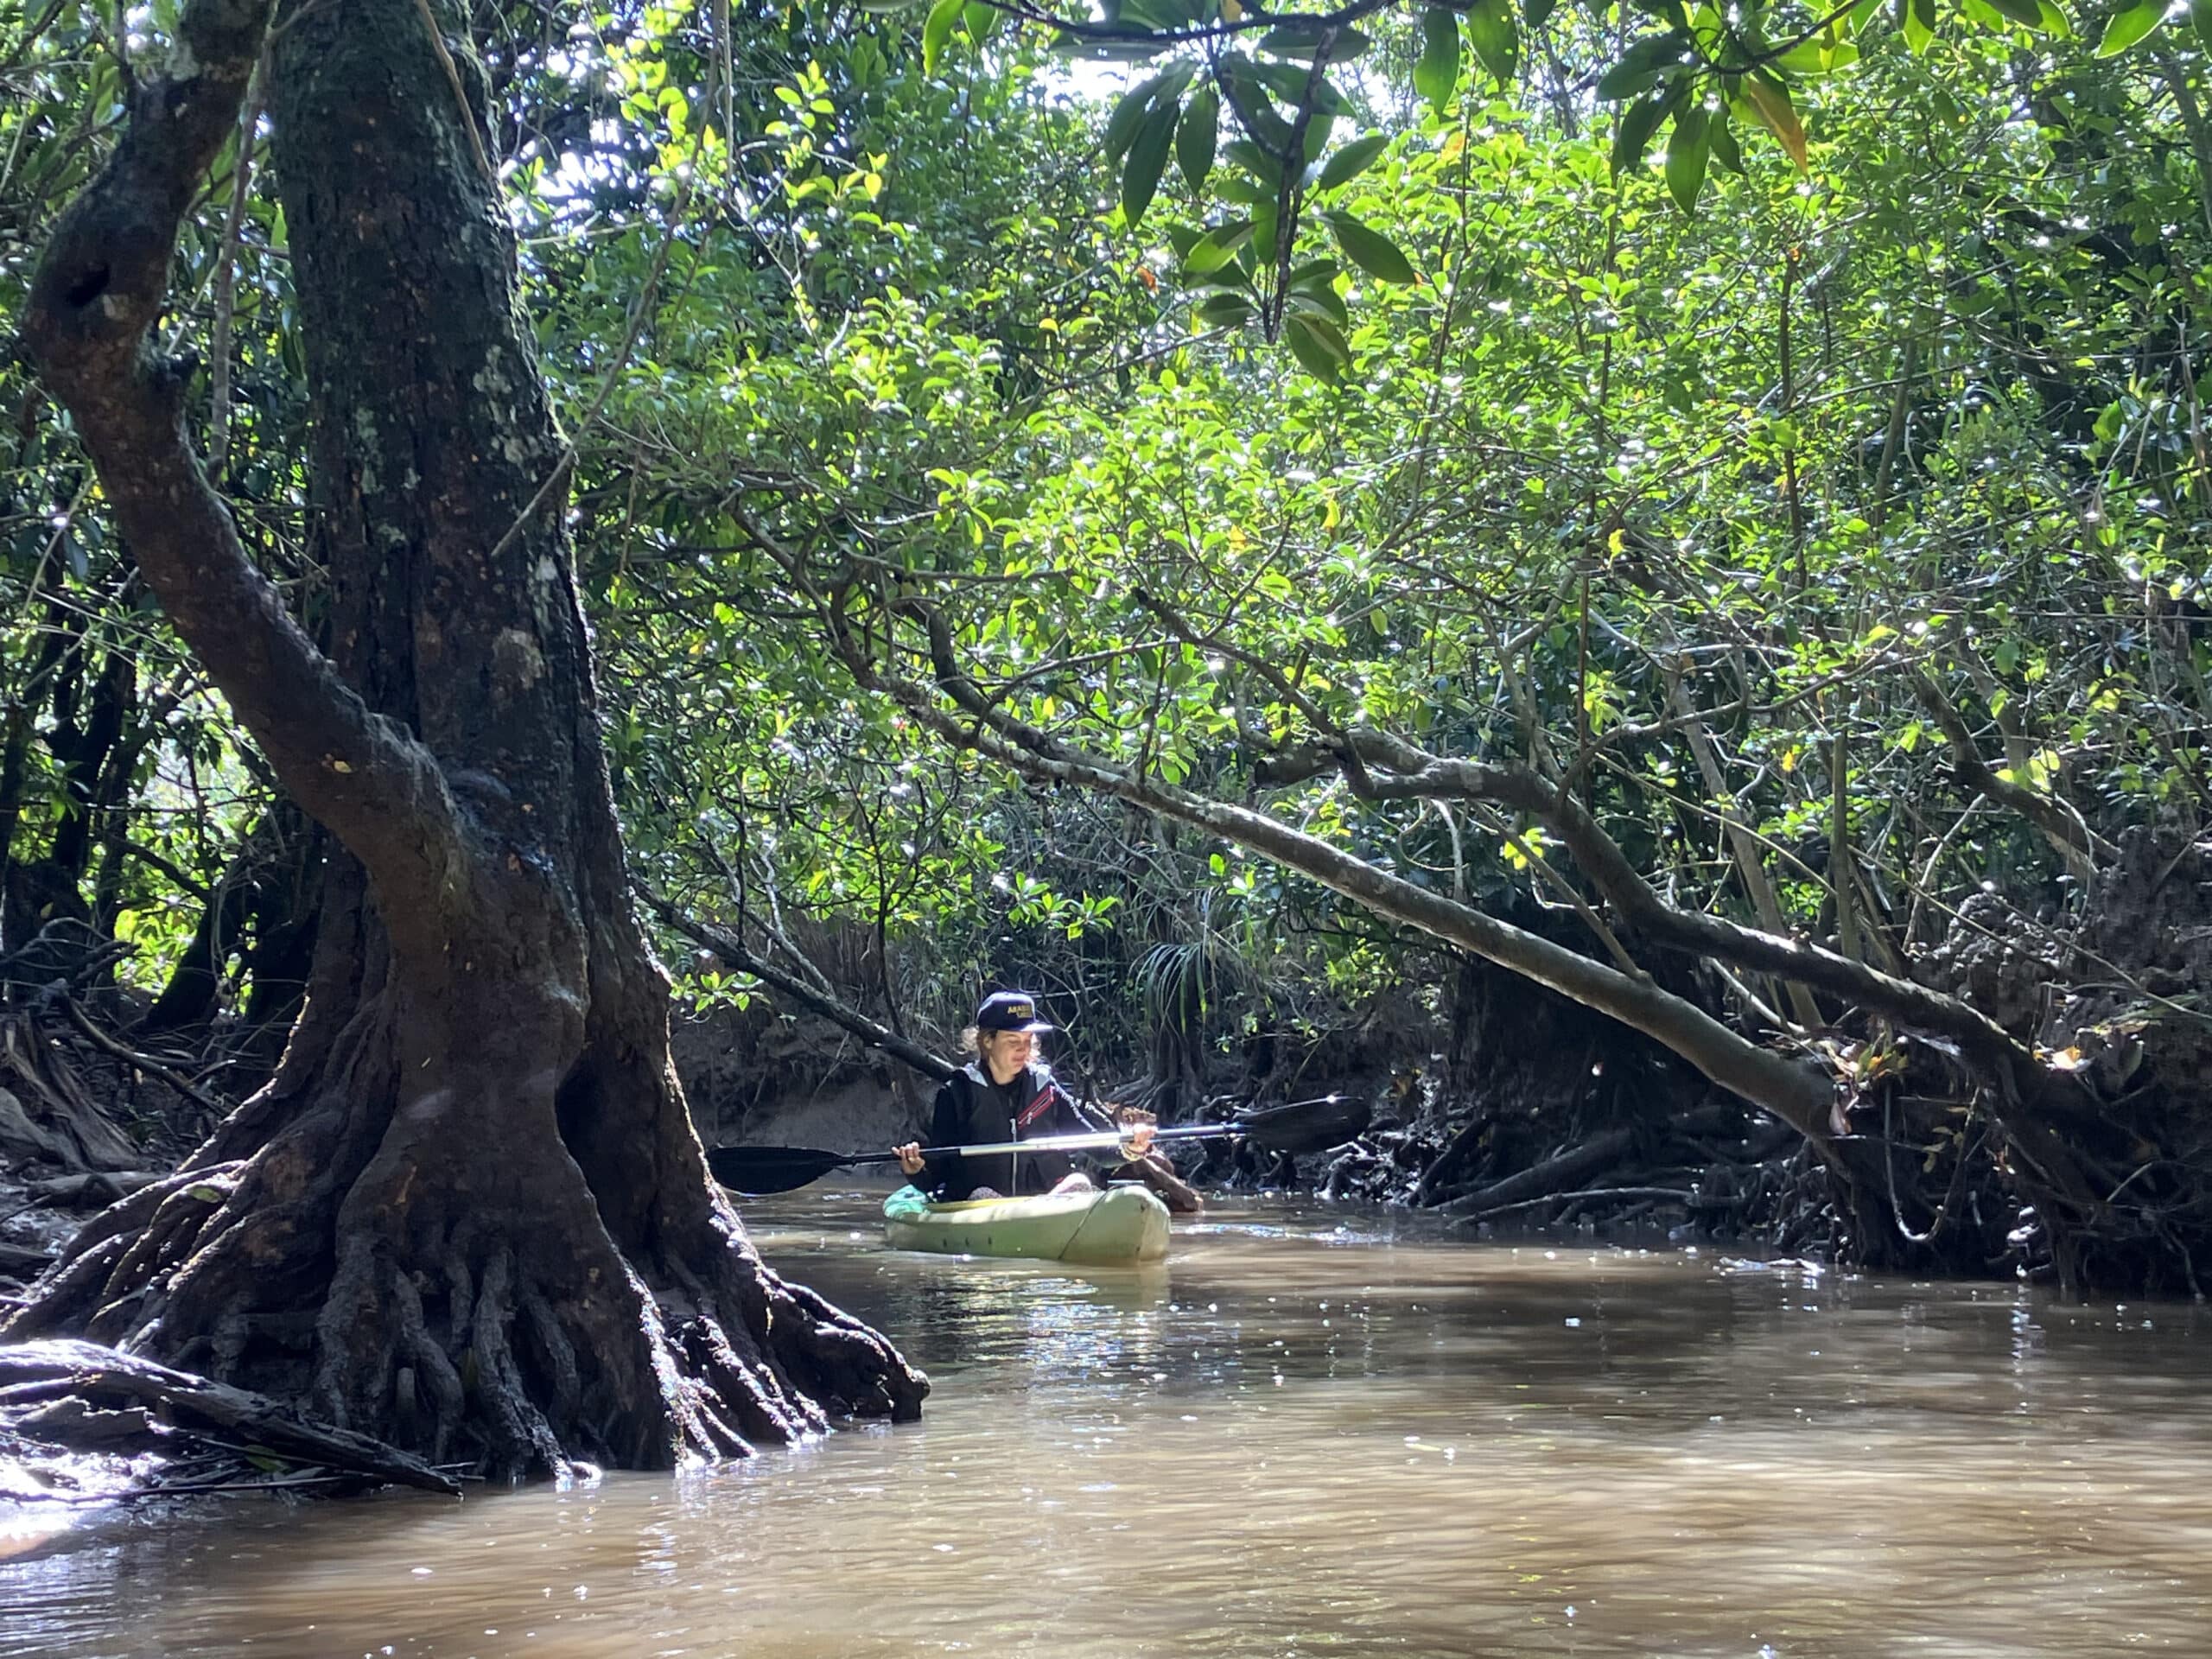 Kayaking through the narrow waterways of the mangroves.